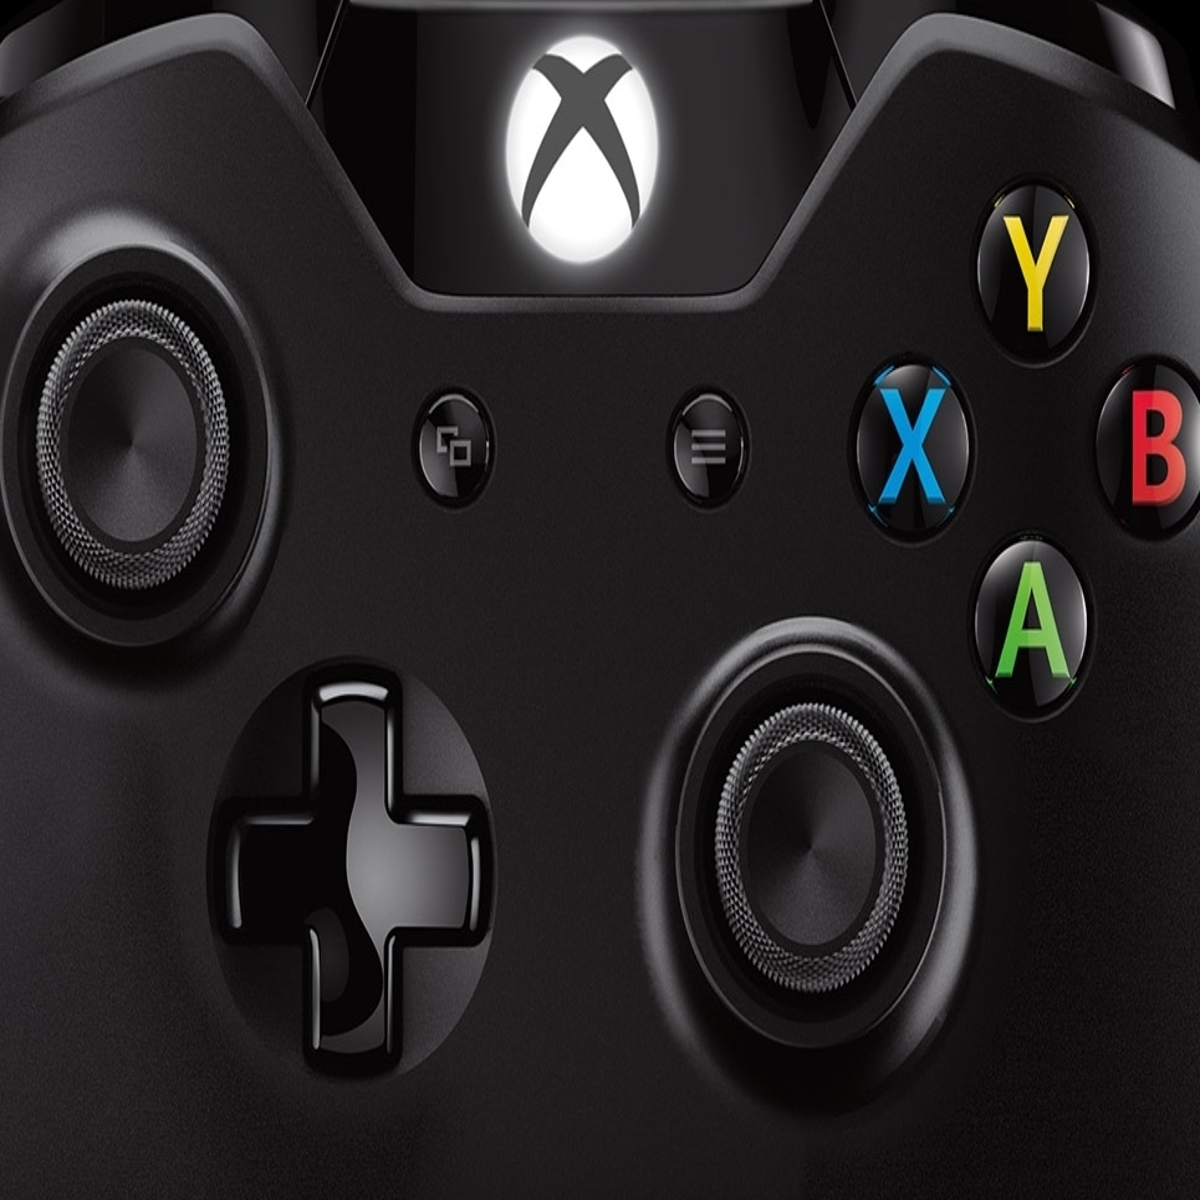 Phil Spencer talks about Lionhead Studio closure, Xbox isn't dead